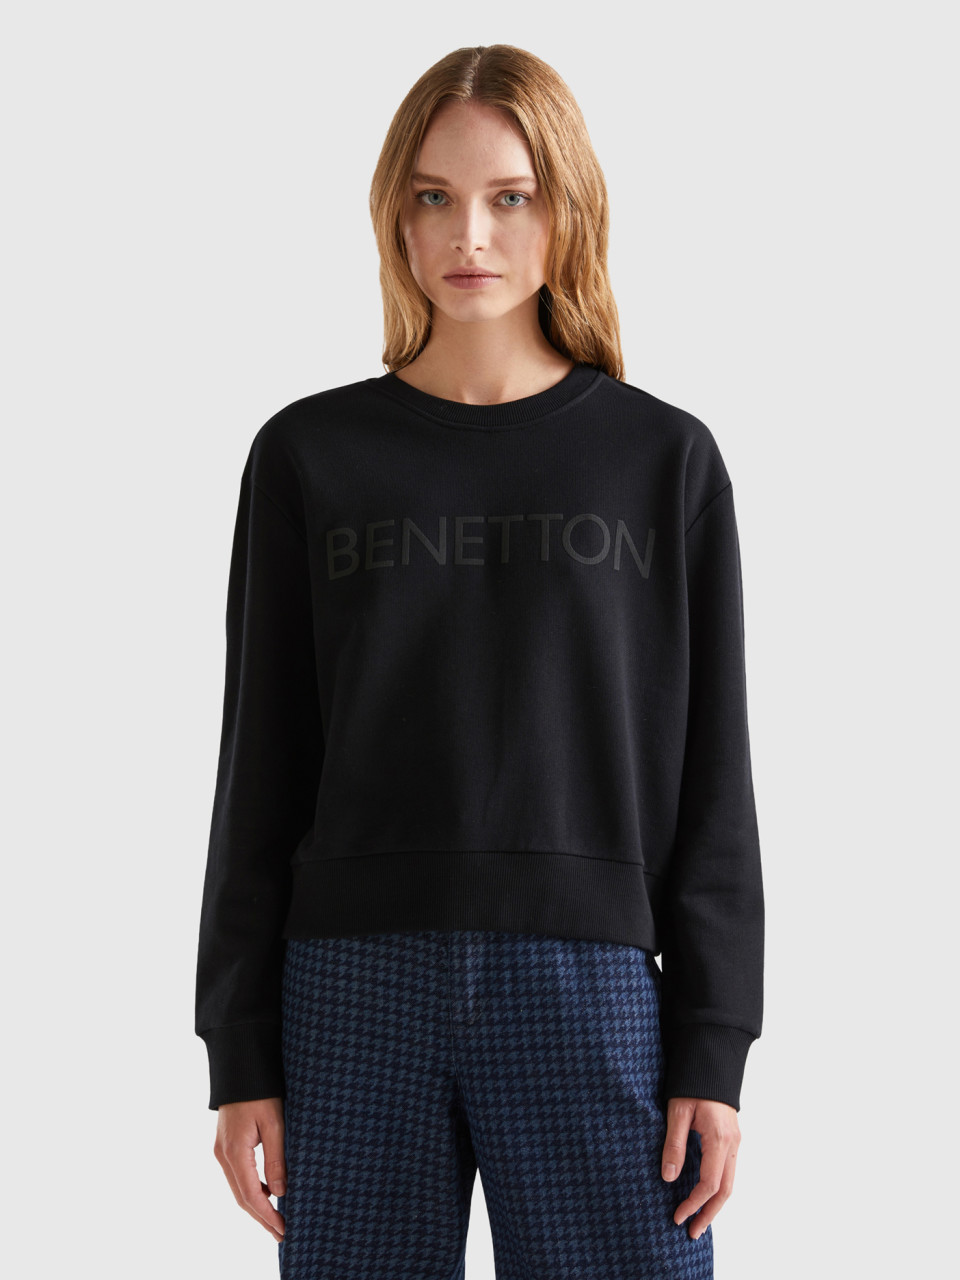 Benetton, Pullover Sweatshirt With Logo Print, Black, Women